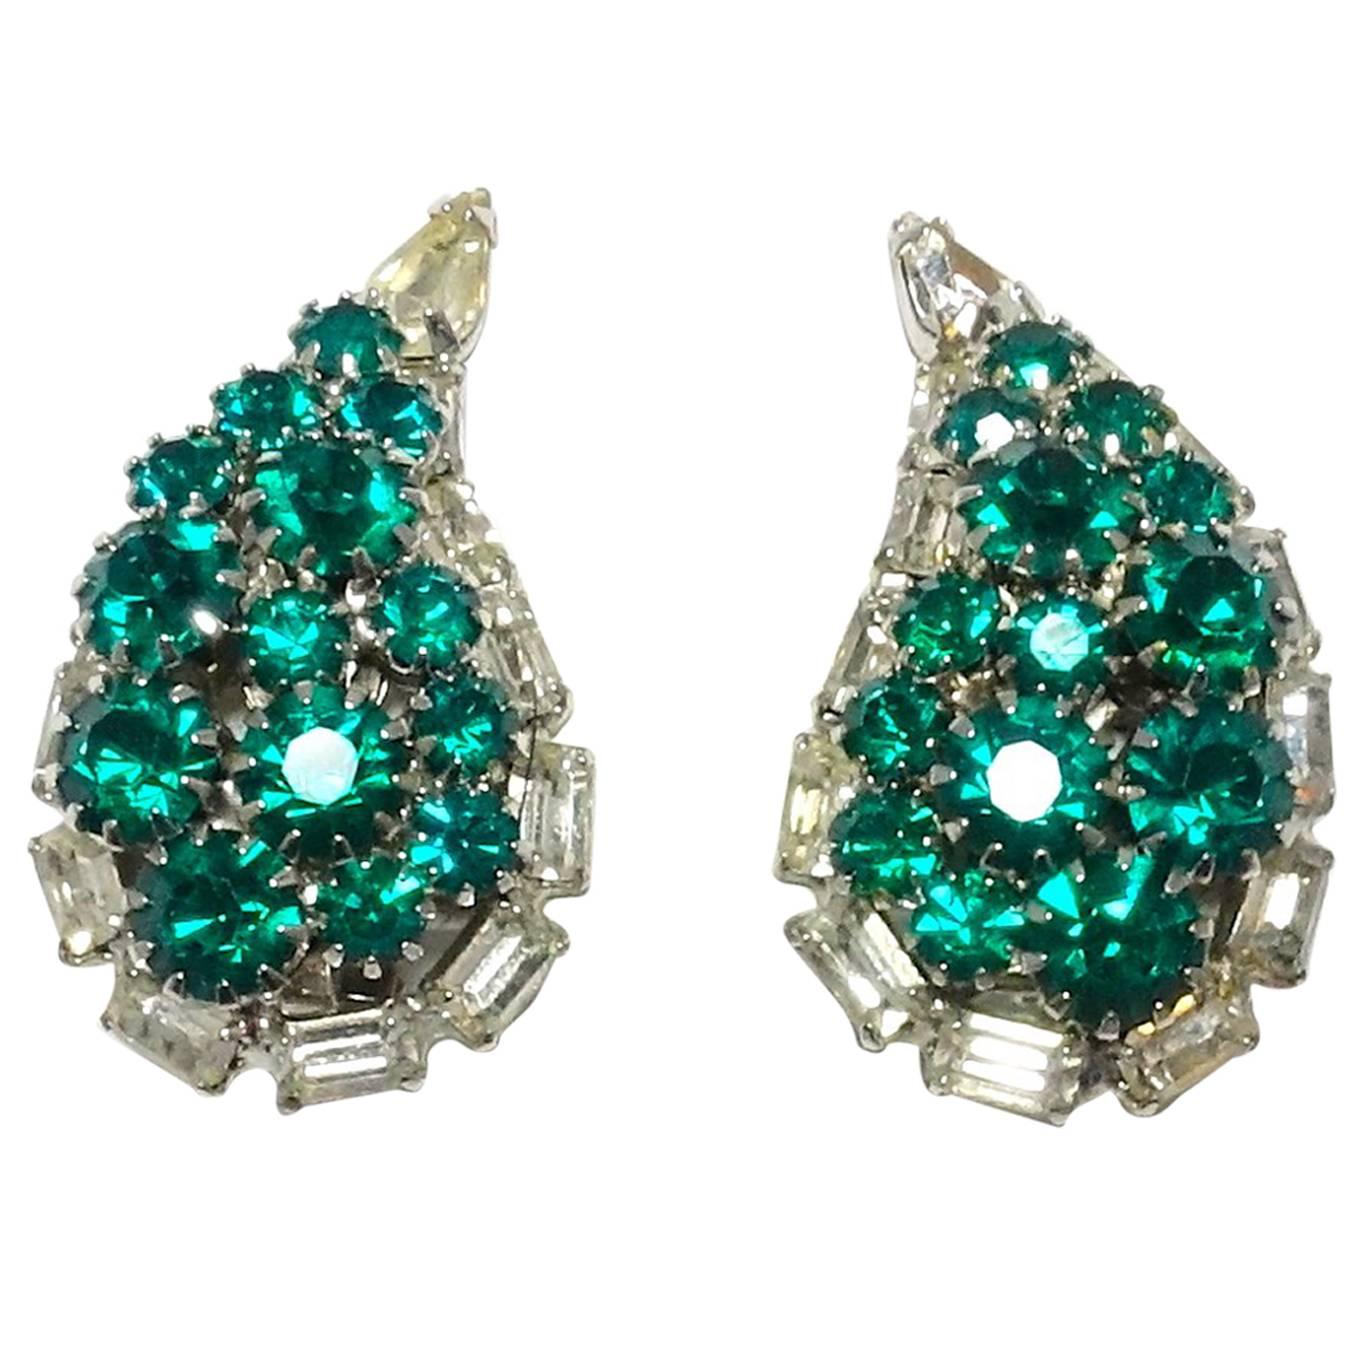 Vintage 60s Teardrop Faux Emerald and Rhinestone Earrings